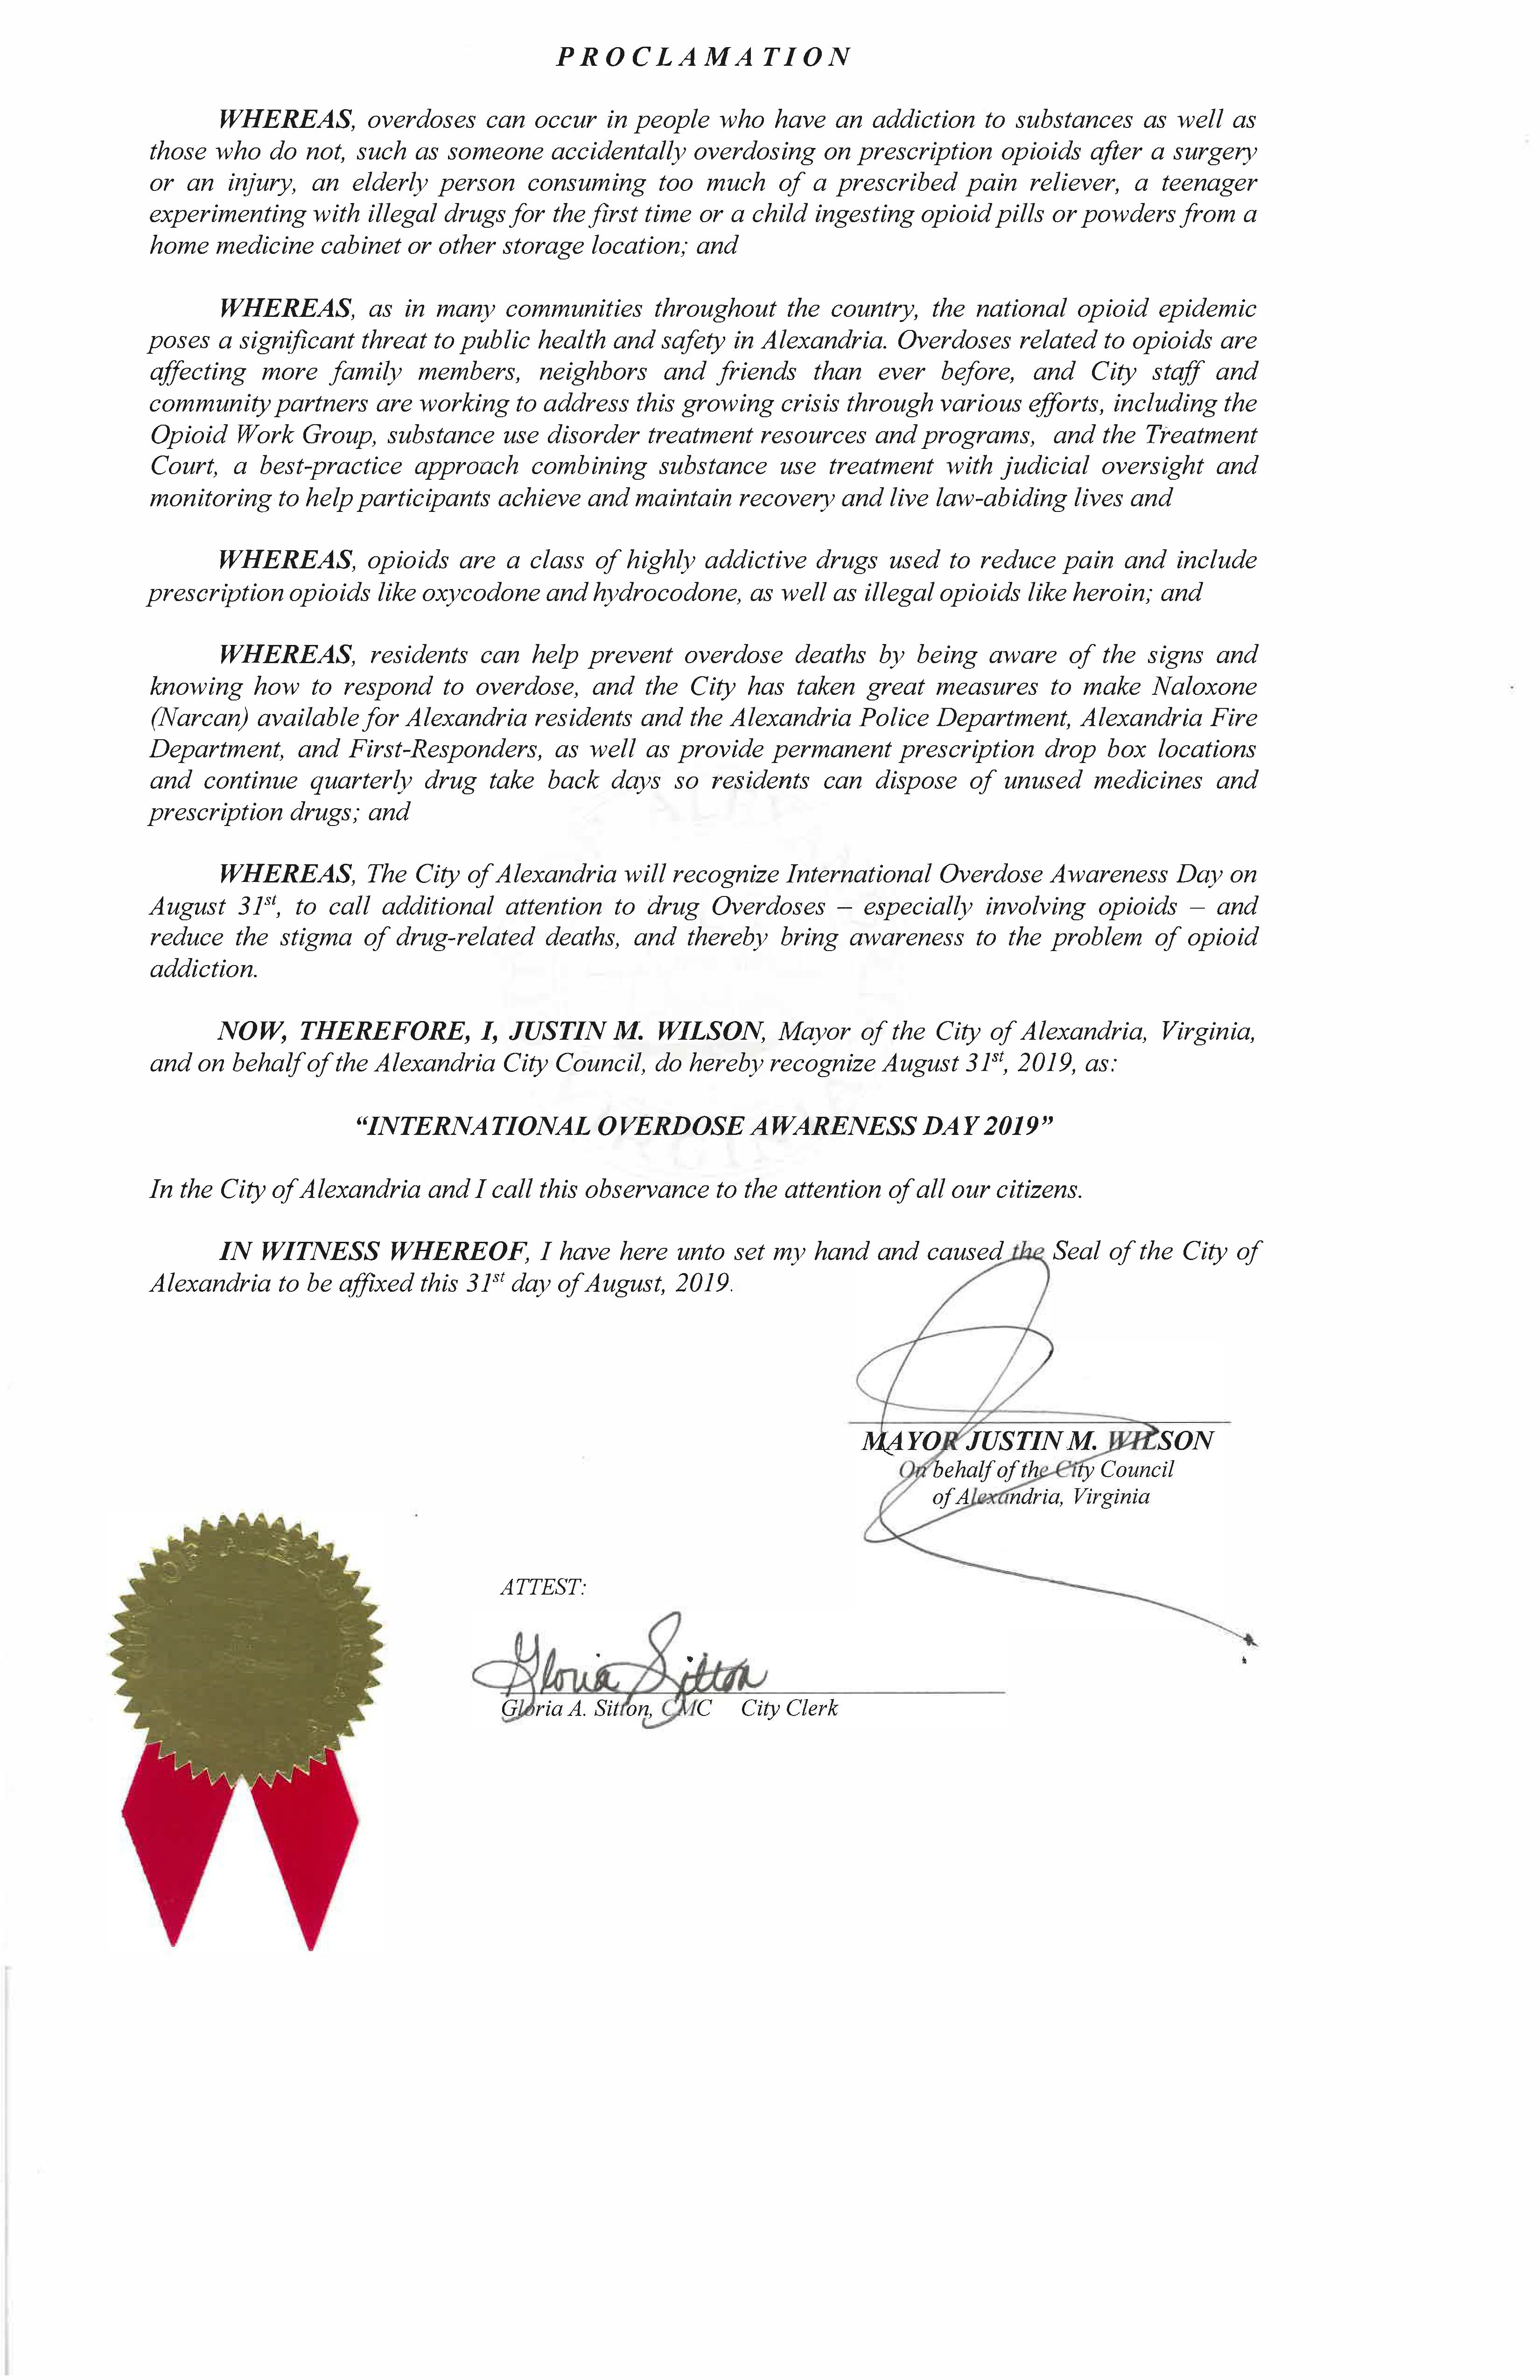 International Overdose Awareness Day 2019 Proclamation Image